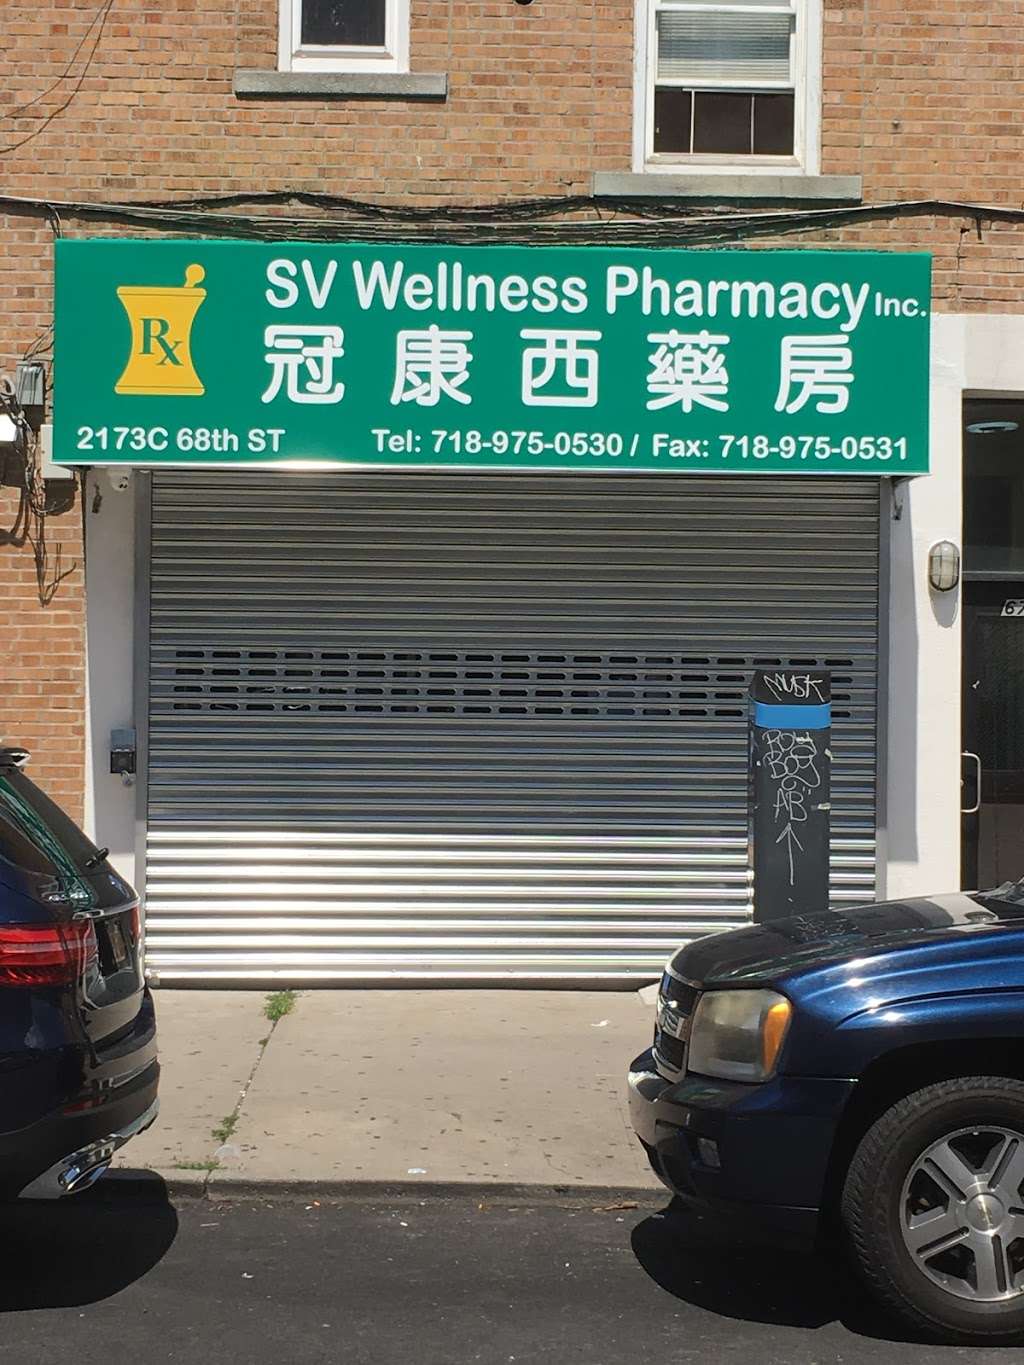 SV Wellness Pharmacy Inc. | Photo 3 of 3 | Address: 2173C 68th St, Brooklyn, NY 11204, USA | Phone: (718) 975-0530